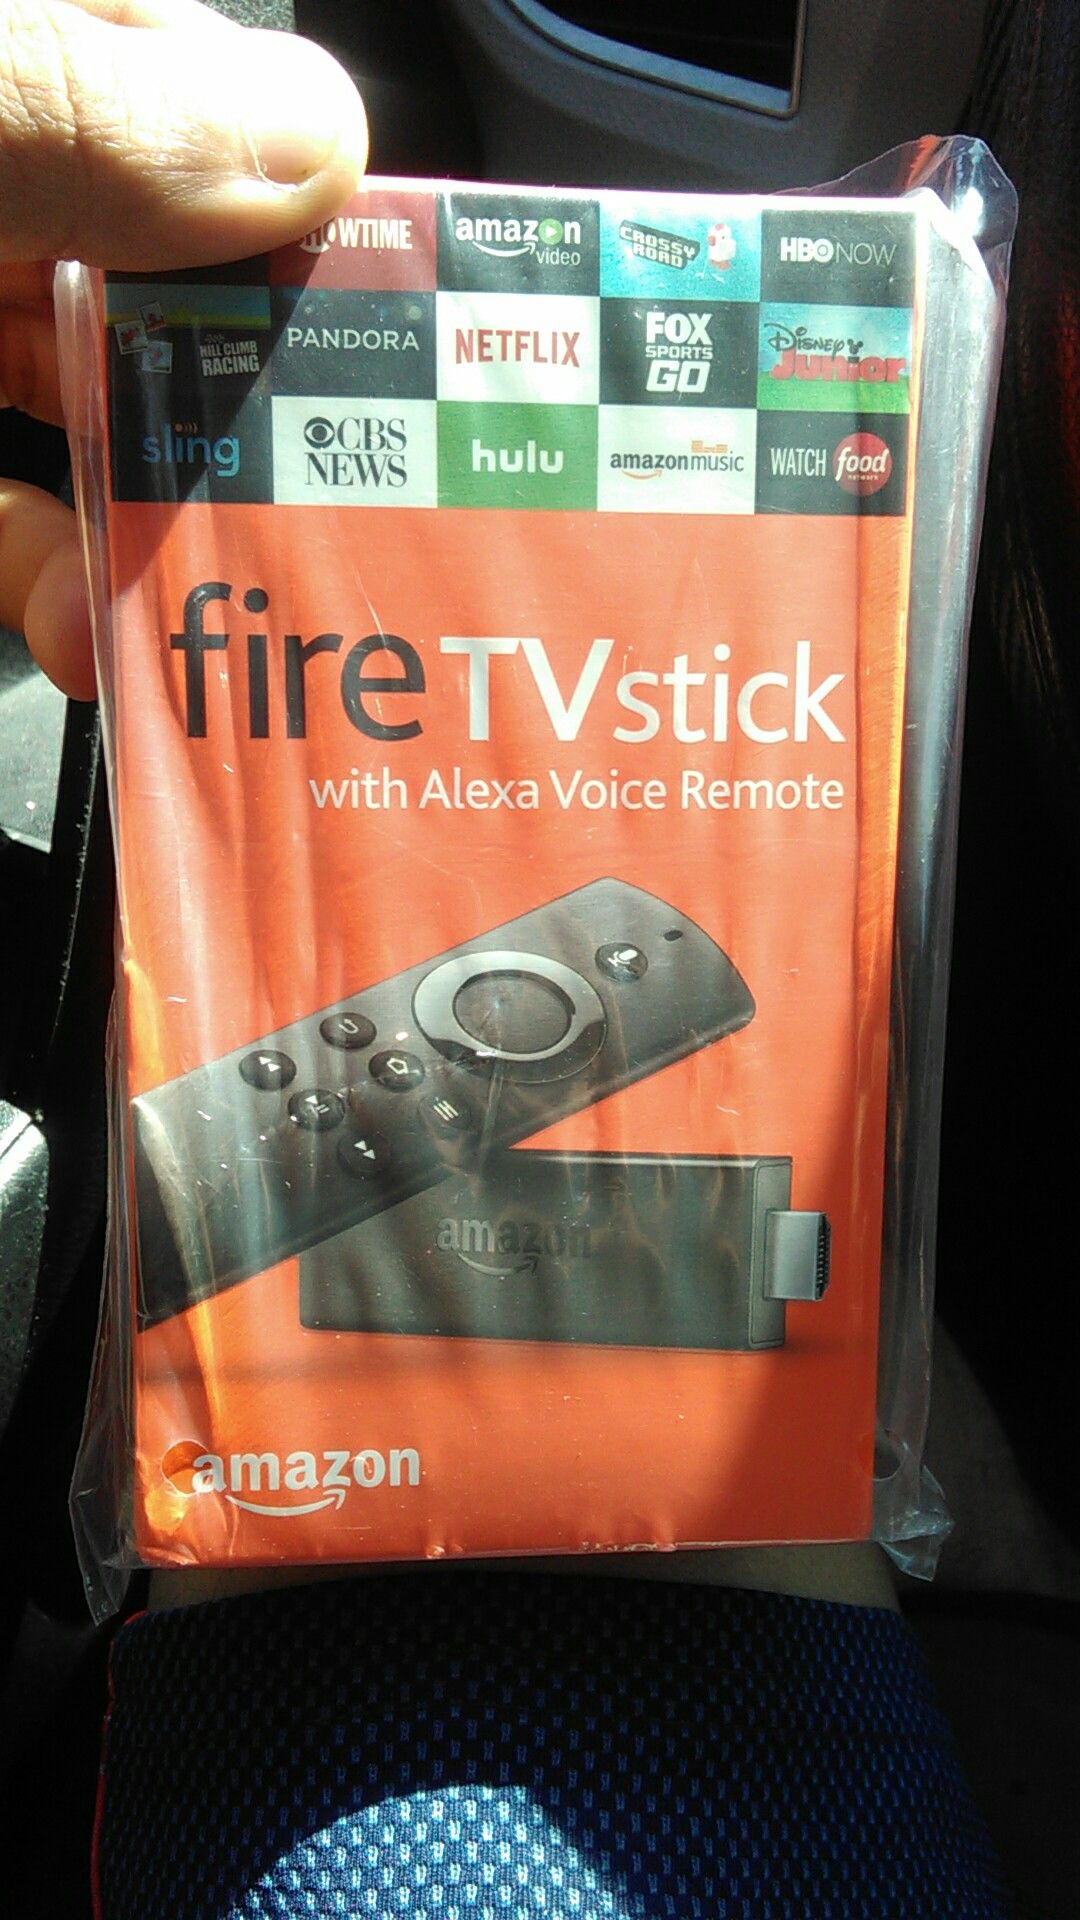 Fire TV stick with Alexa voice remote